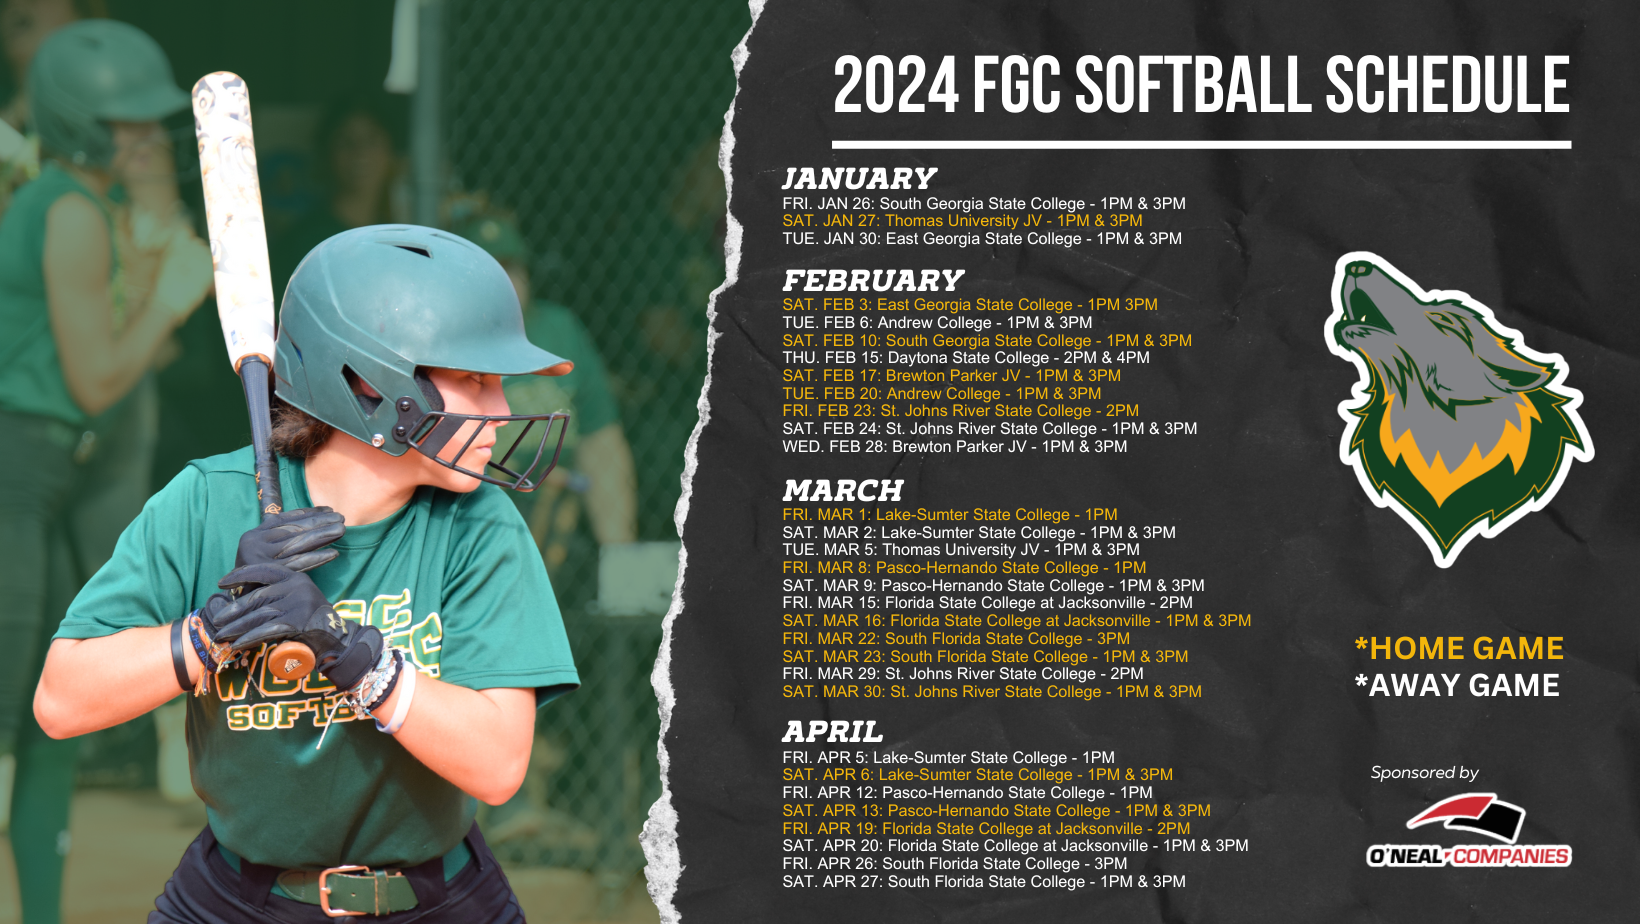 FGC Softball 2024 Schedule